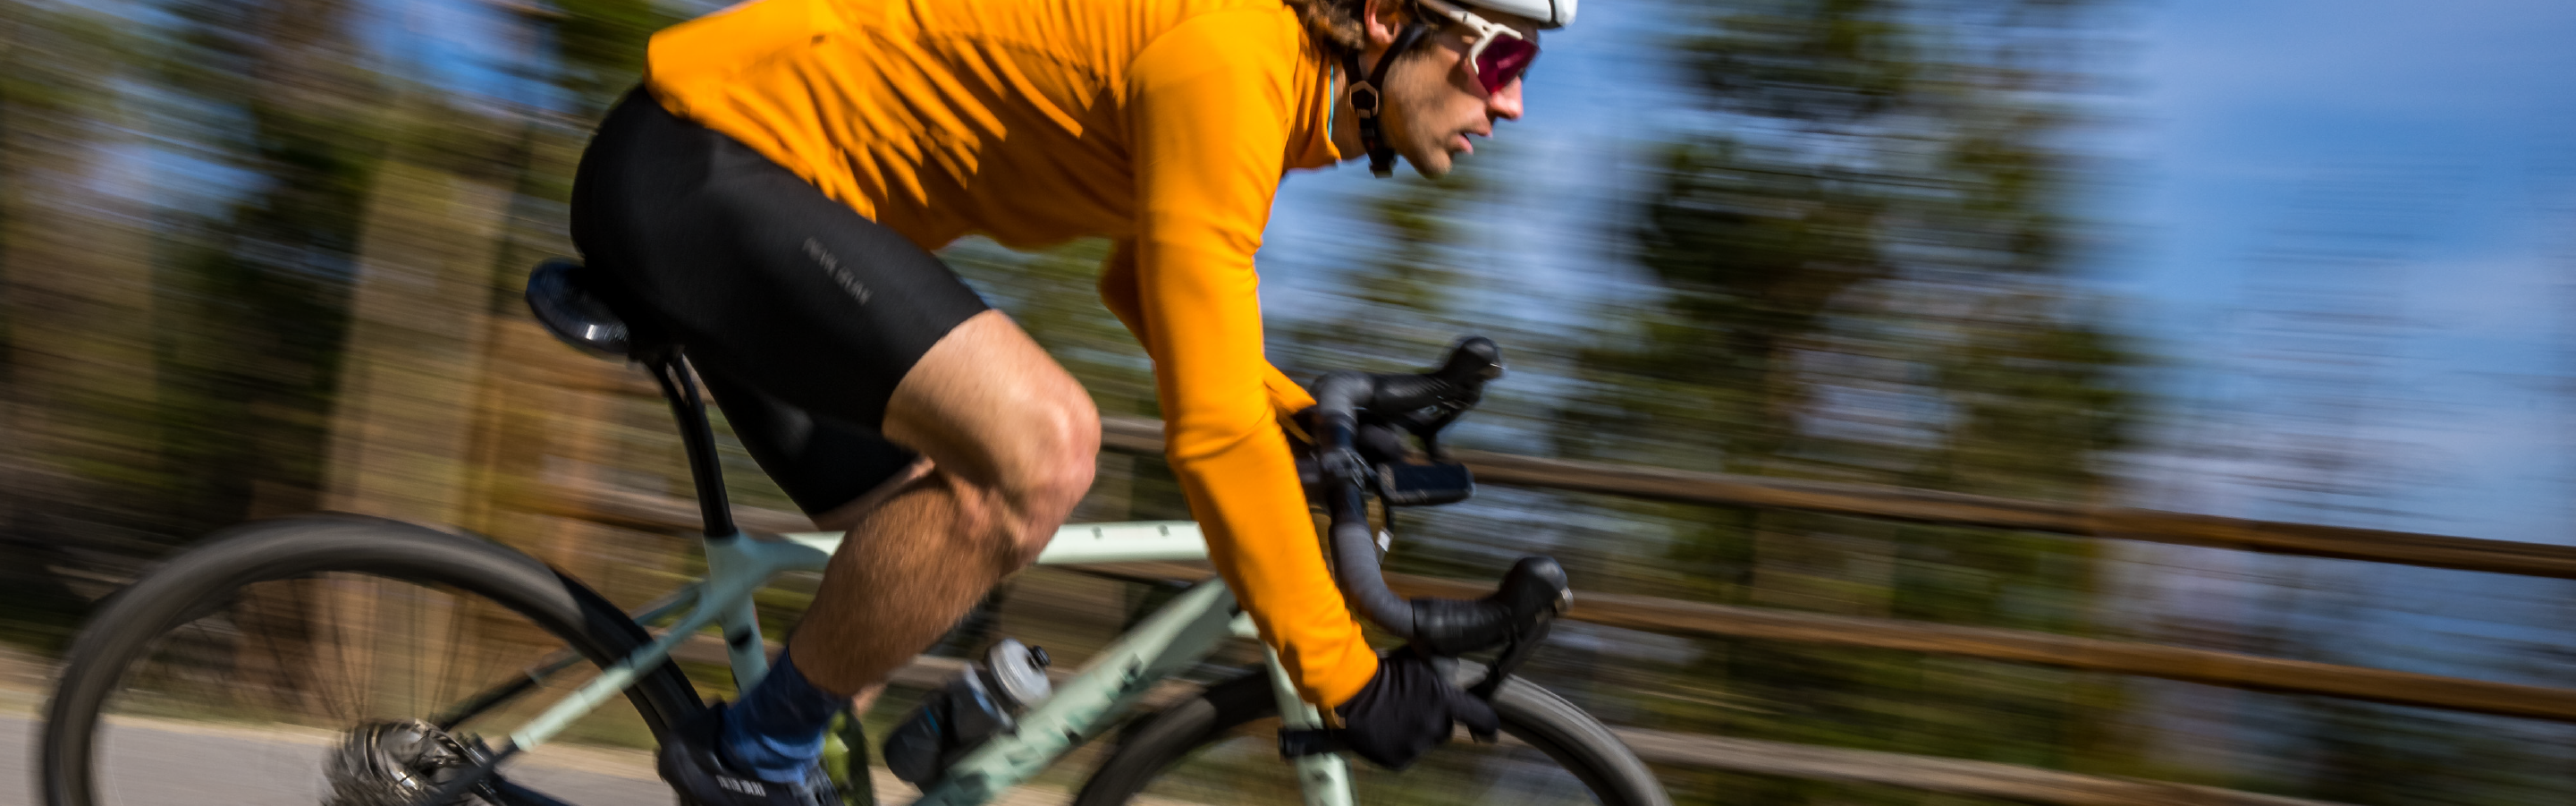 Hyve-Bosch Gel Padded Cycling Shorts for Men